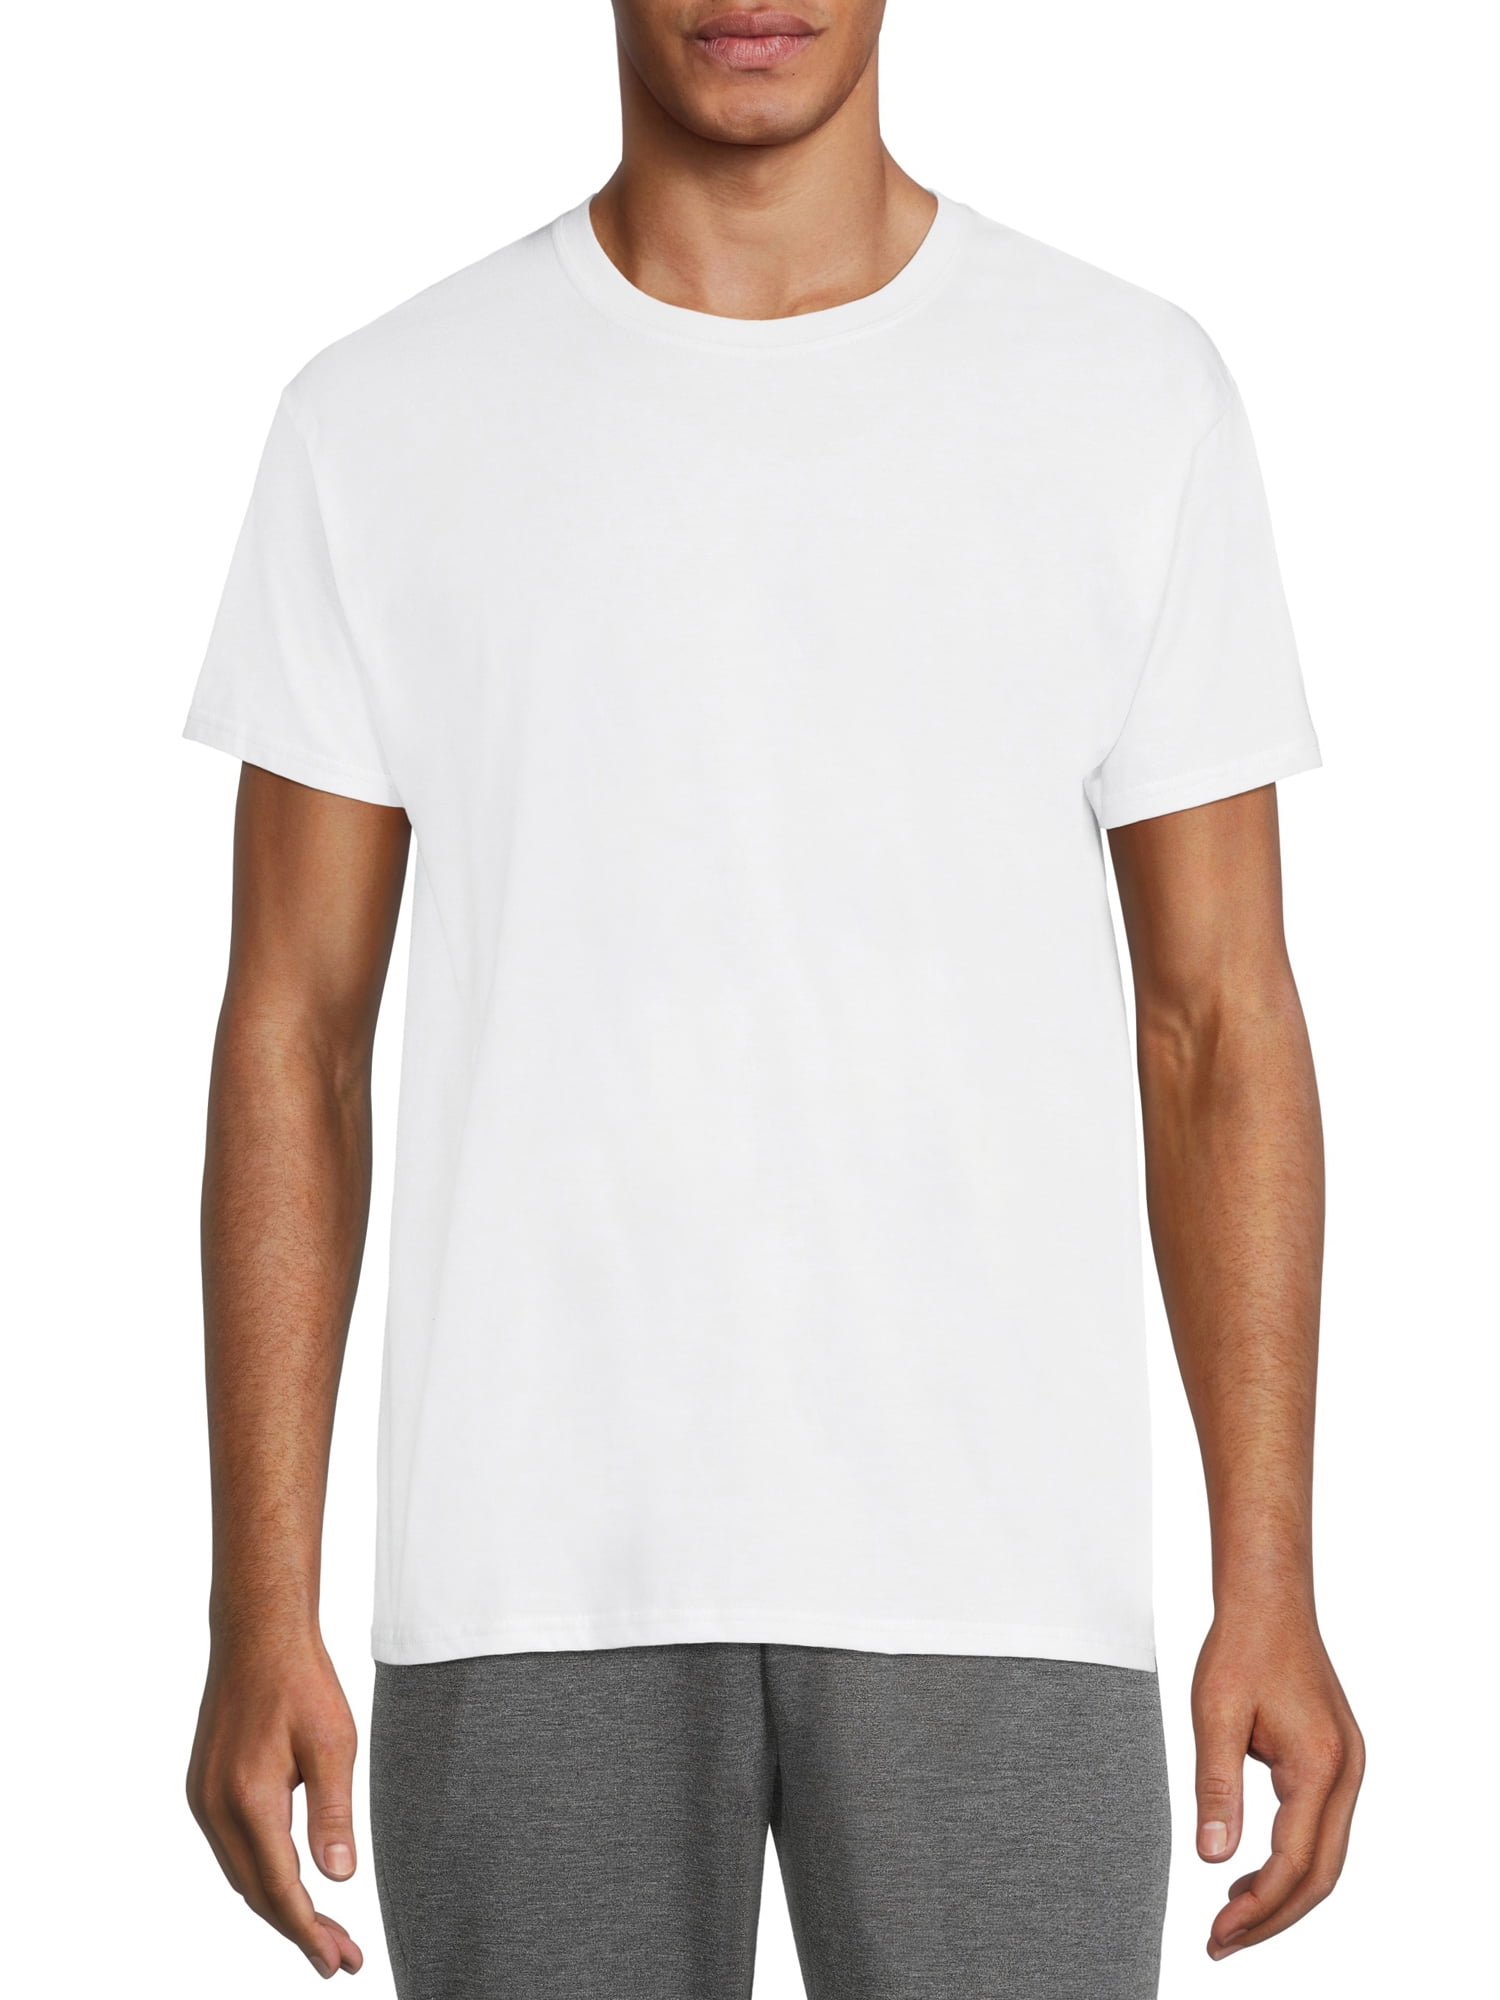 ALWAYSONE Men's Short Sleeve T-Shirt Ultra Cotton Jersey Tee Crewneck  Workwear T-Shirts Athletic T-Shirt Size S-3XL (Army Green-s)